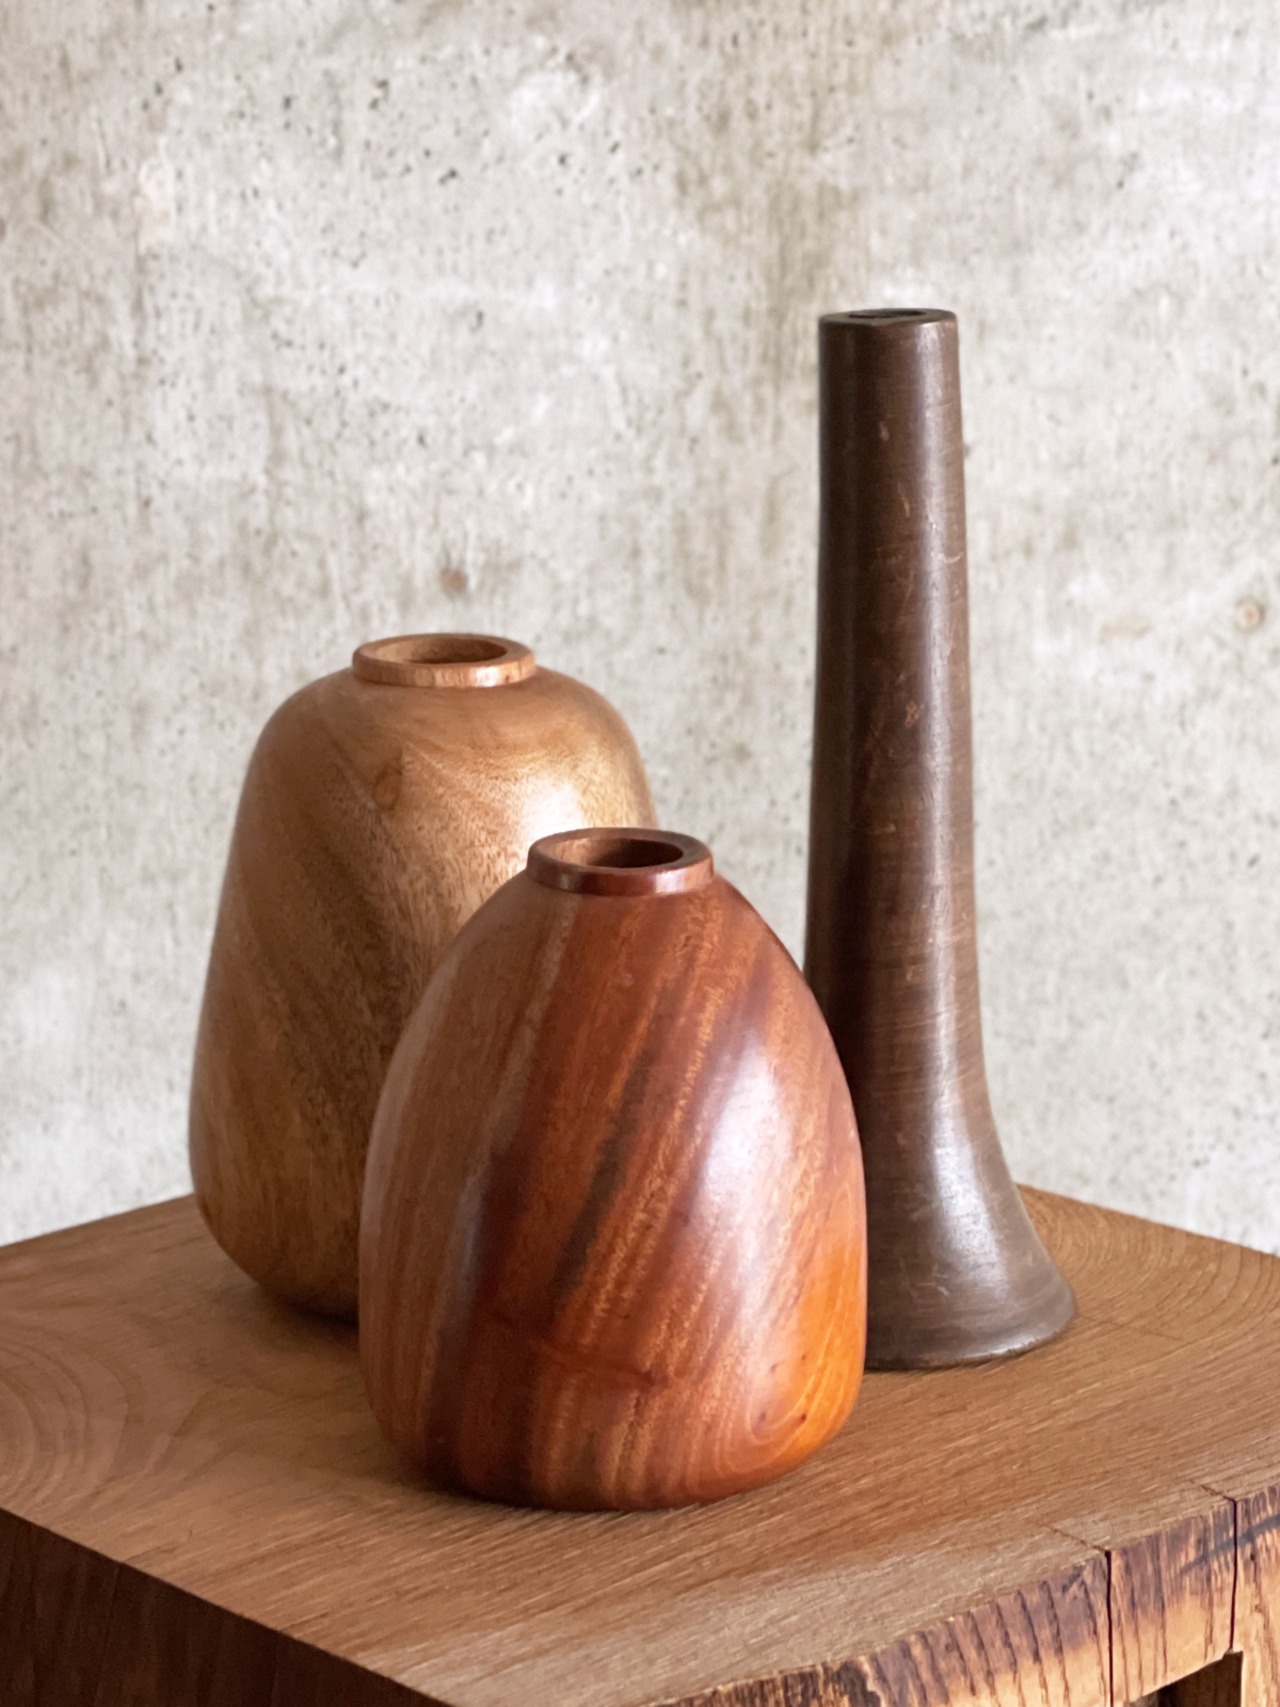 Miniwood design／Flower vase